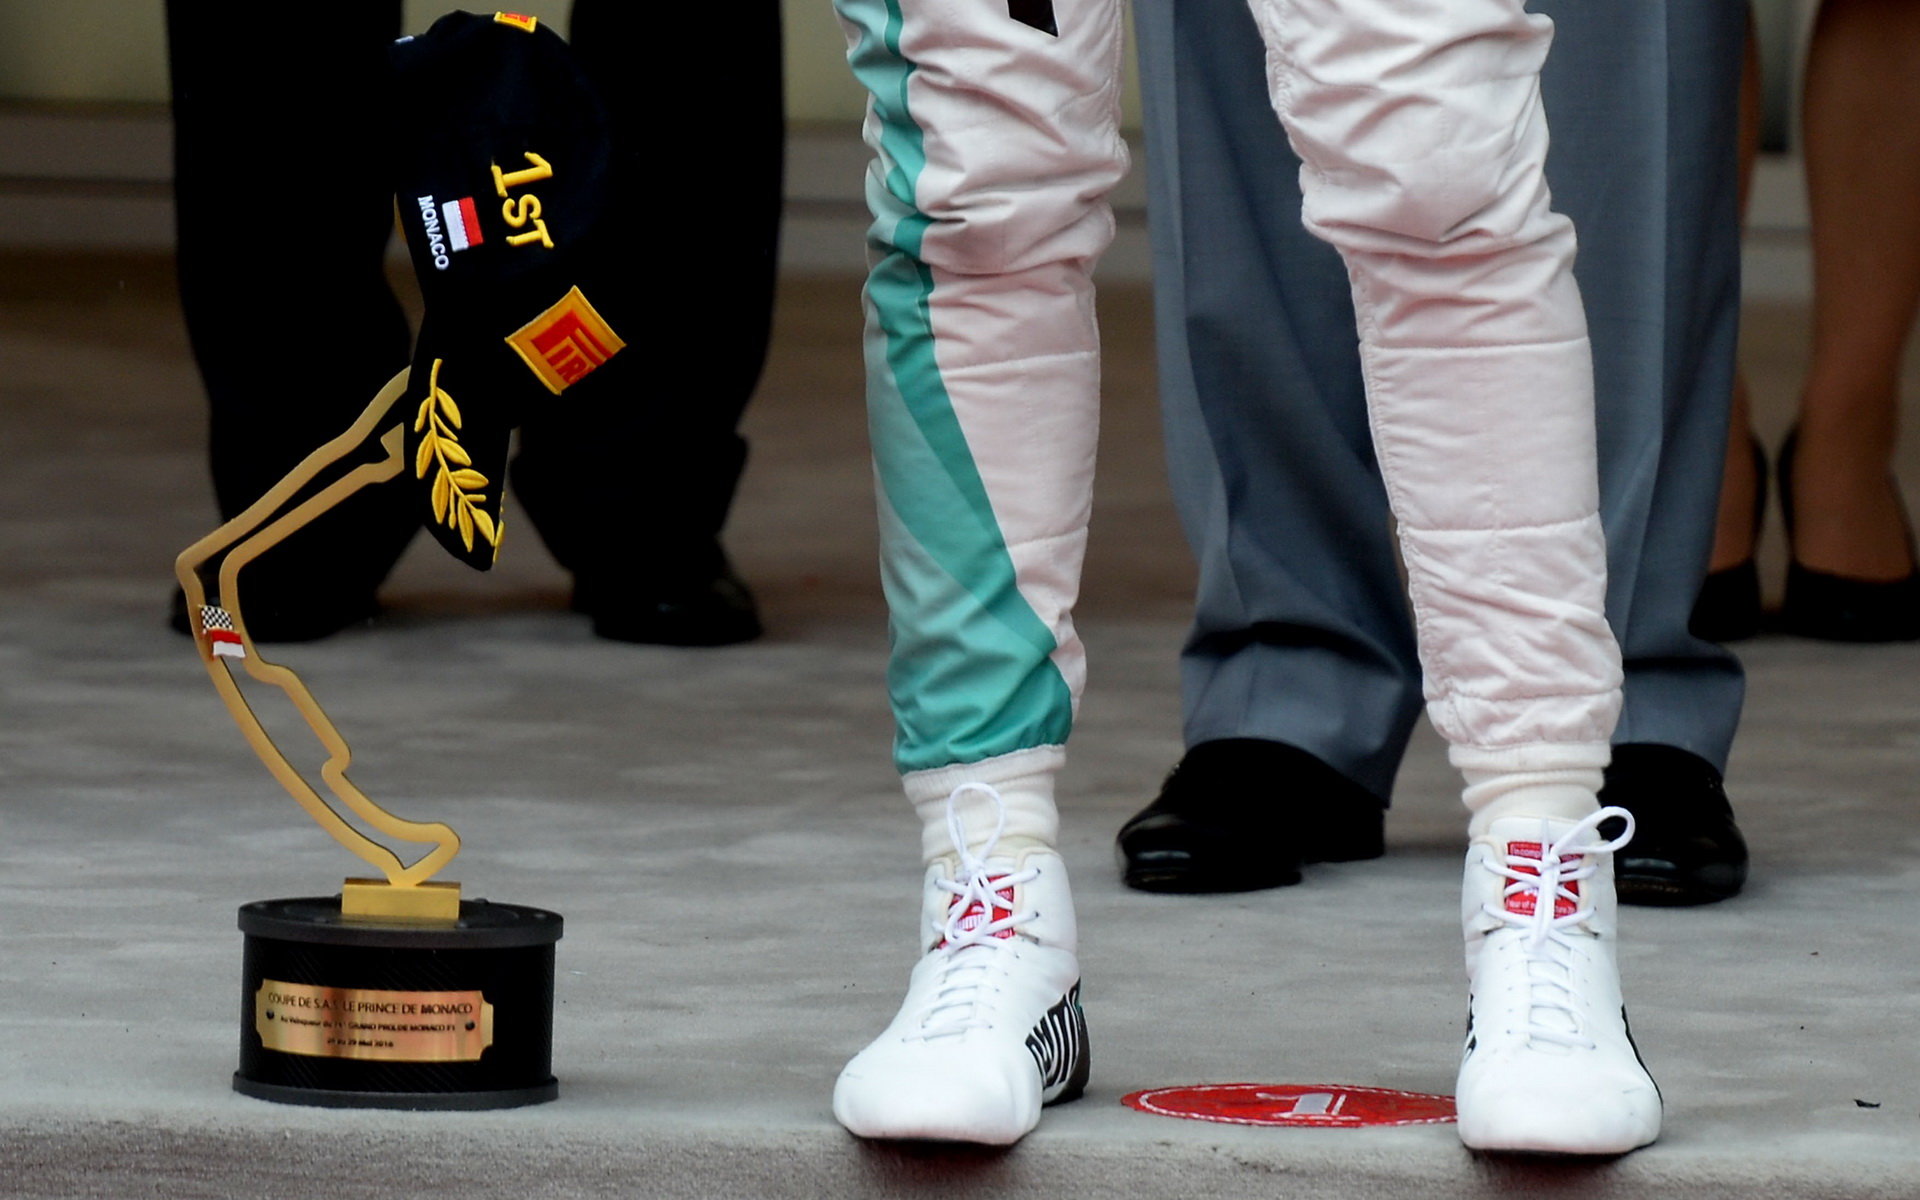 Trofej vítěze - Lewise Hamiltona v Monaku